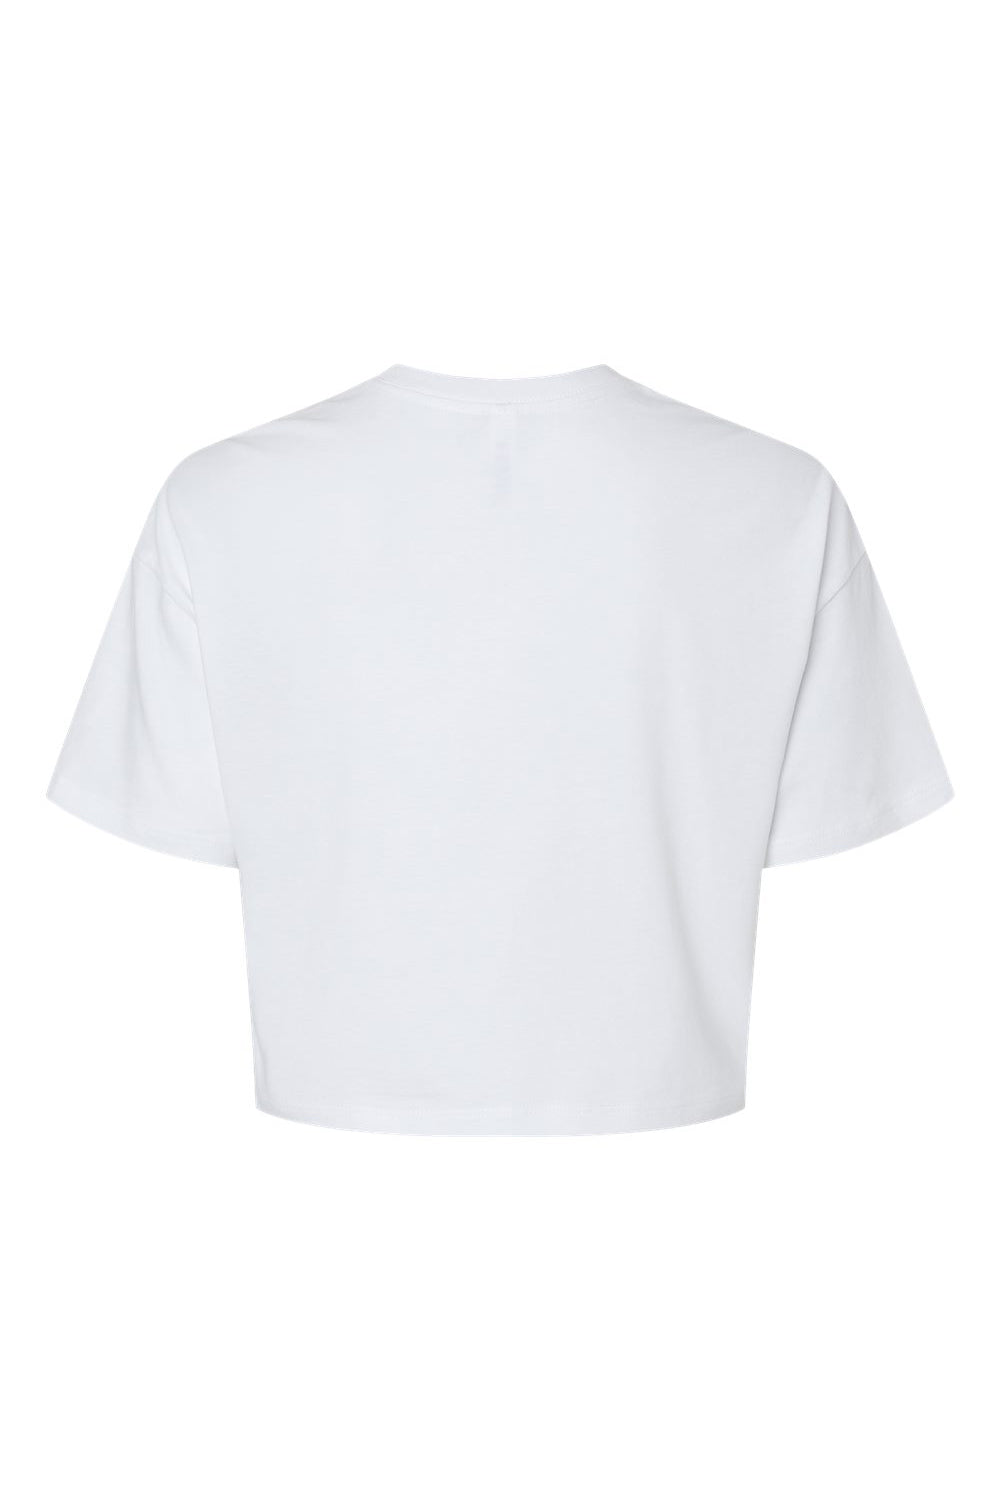 Bella + Canvas 6482 Womens Jersey Cropped Short Sleeve Crewneck T-Shirt White Flat Back